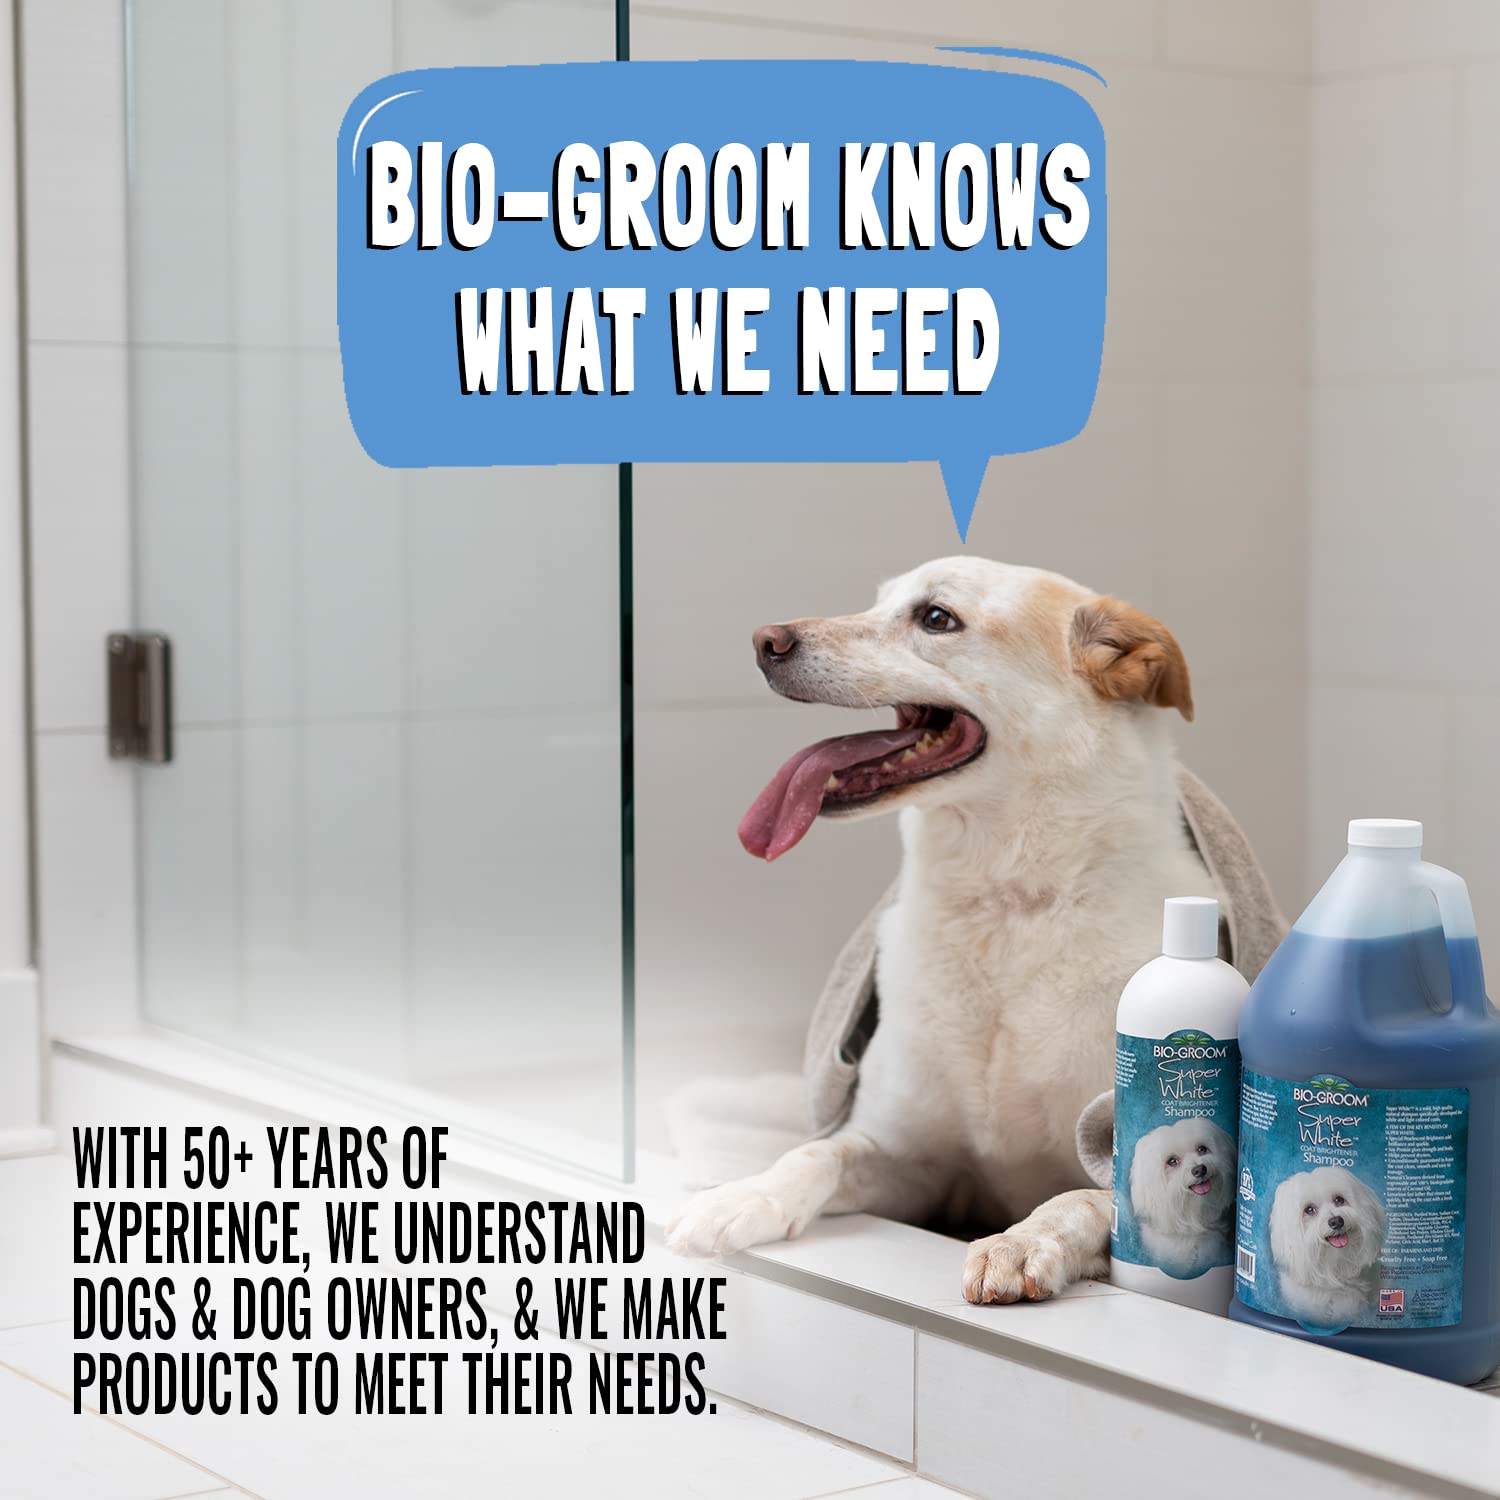 Bio-Groom Bronze Luster Shampoo for Dogs, 355 ml